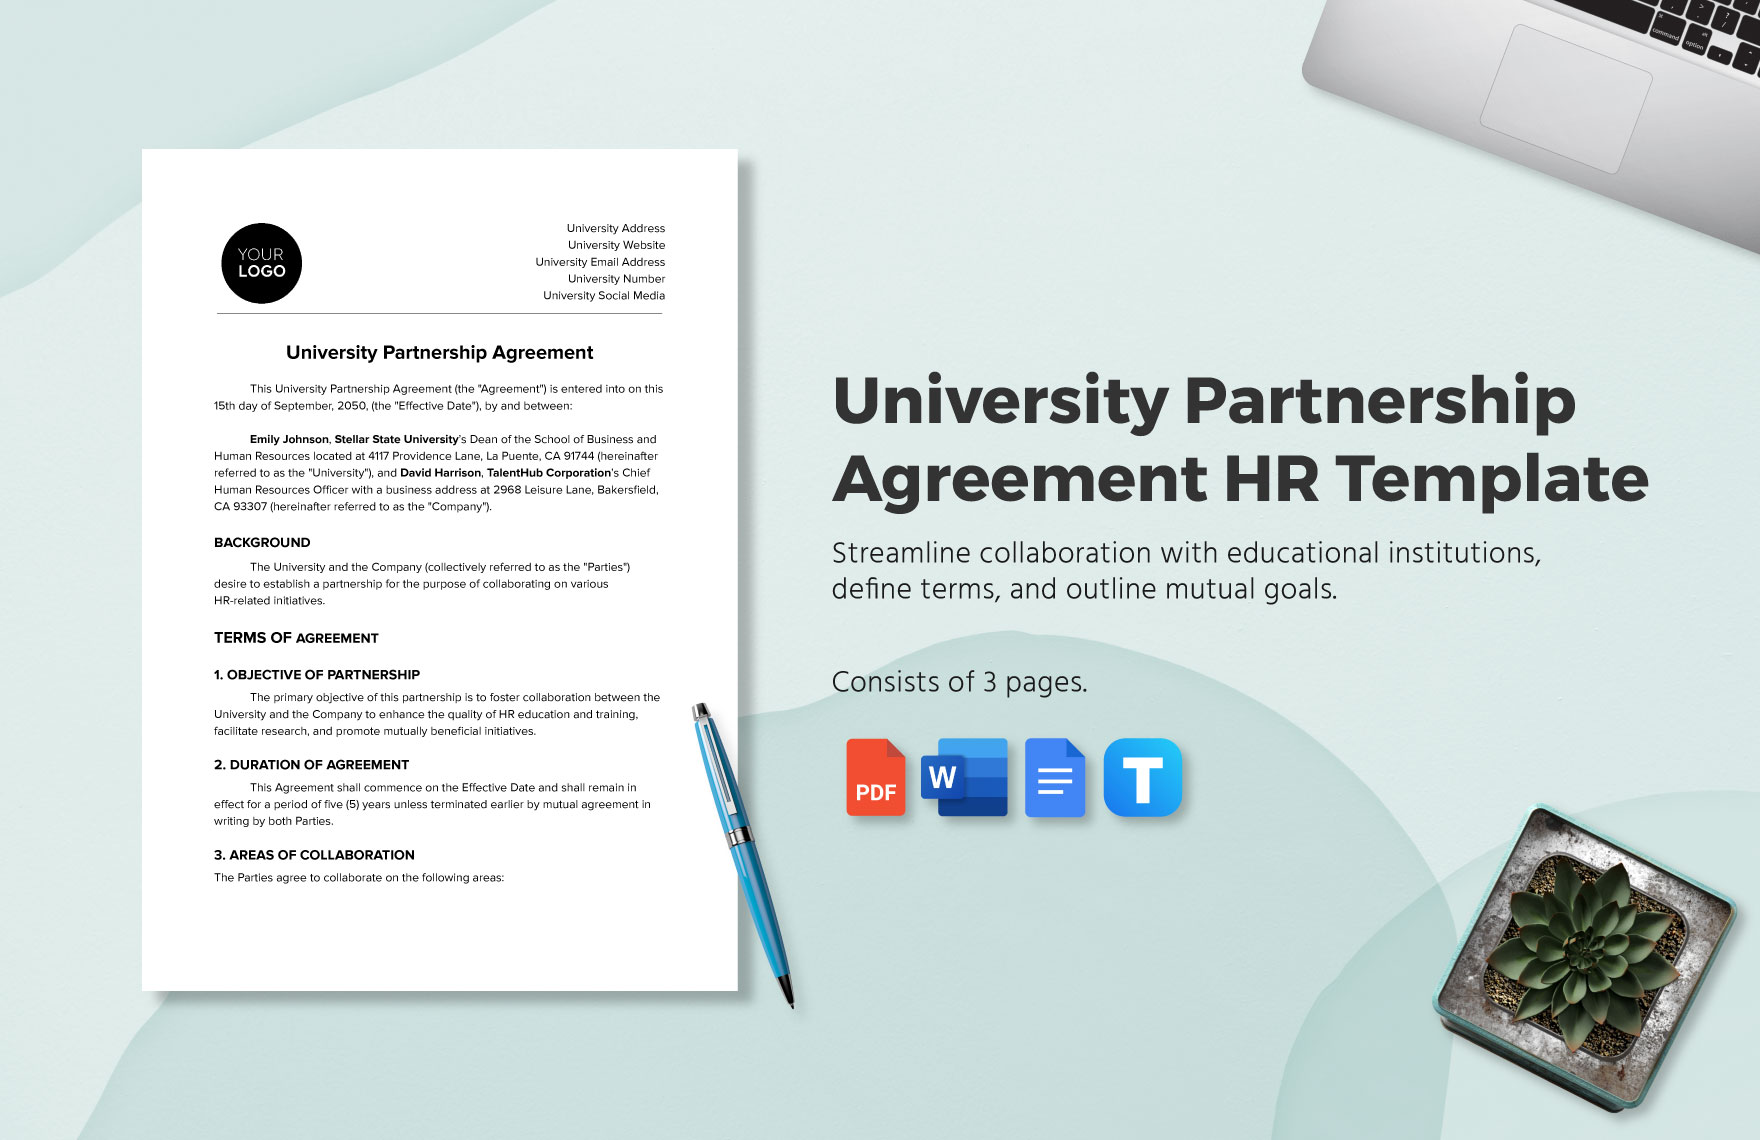 University Partnership Agreement HR Template in Word, Google Docs, PDF